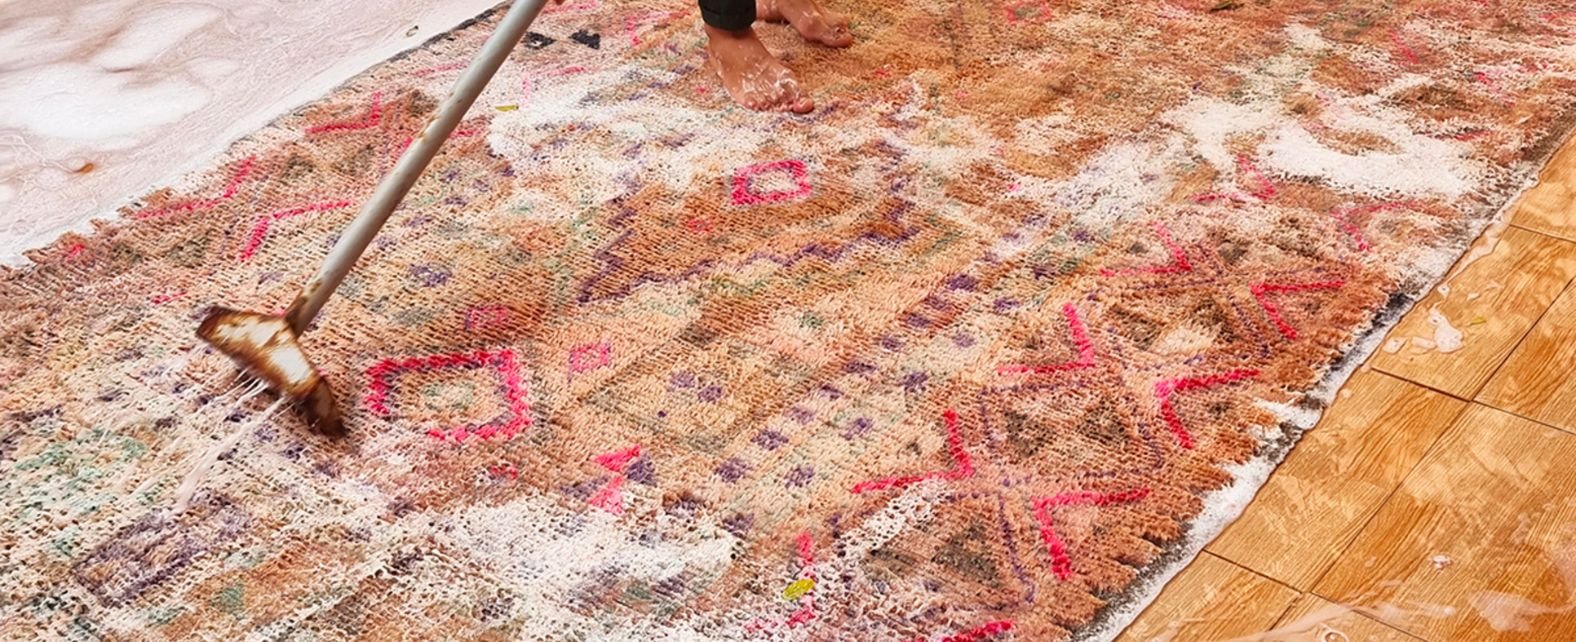 Nettoyage en profondeur d'un tapis berbere